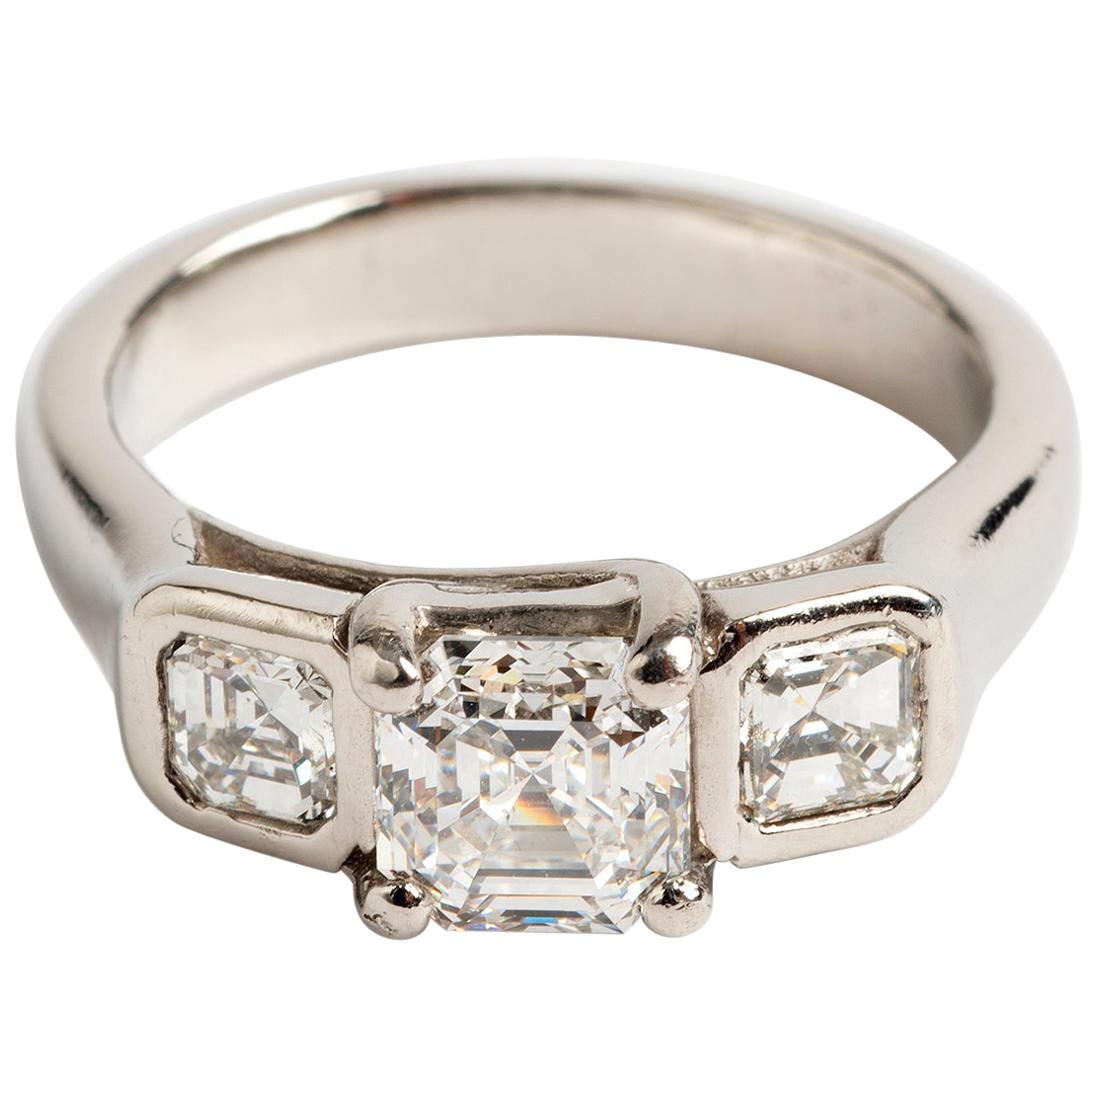 Asscher Cut Diamond Trilogy Ring, Platinum Band, Estimate 1.55 Carat